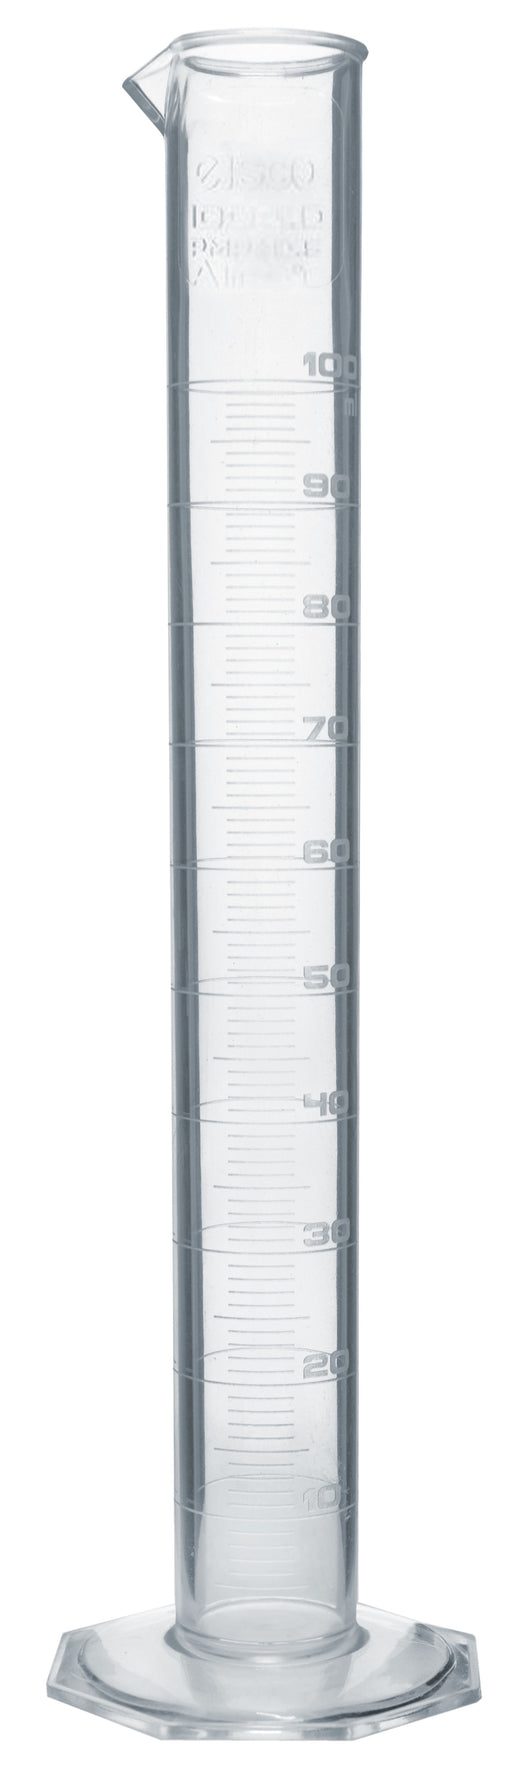 Measuring Cylinder, 100ml - Class B - TPX